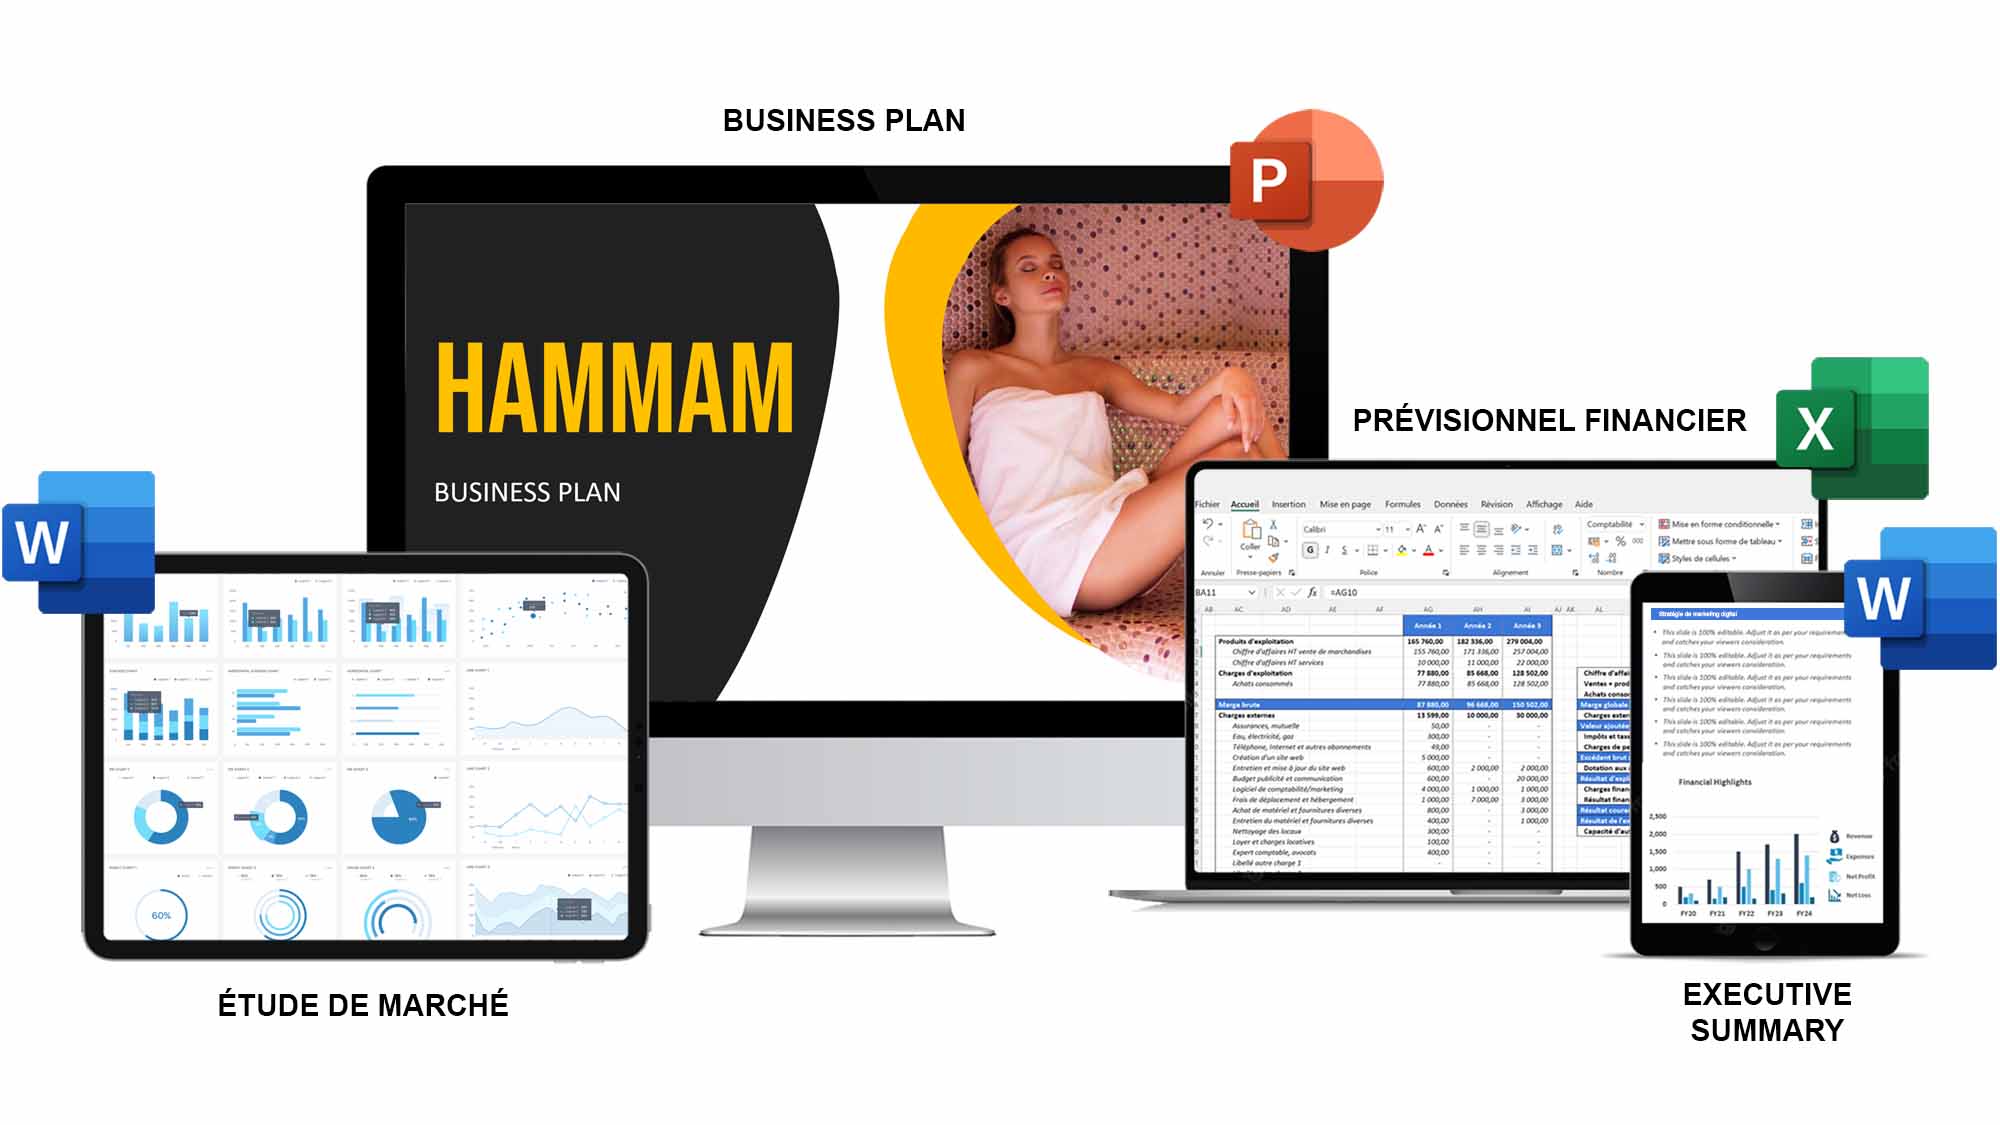 business plan hammam pdf